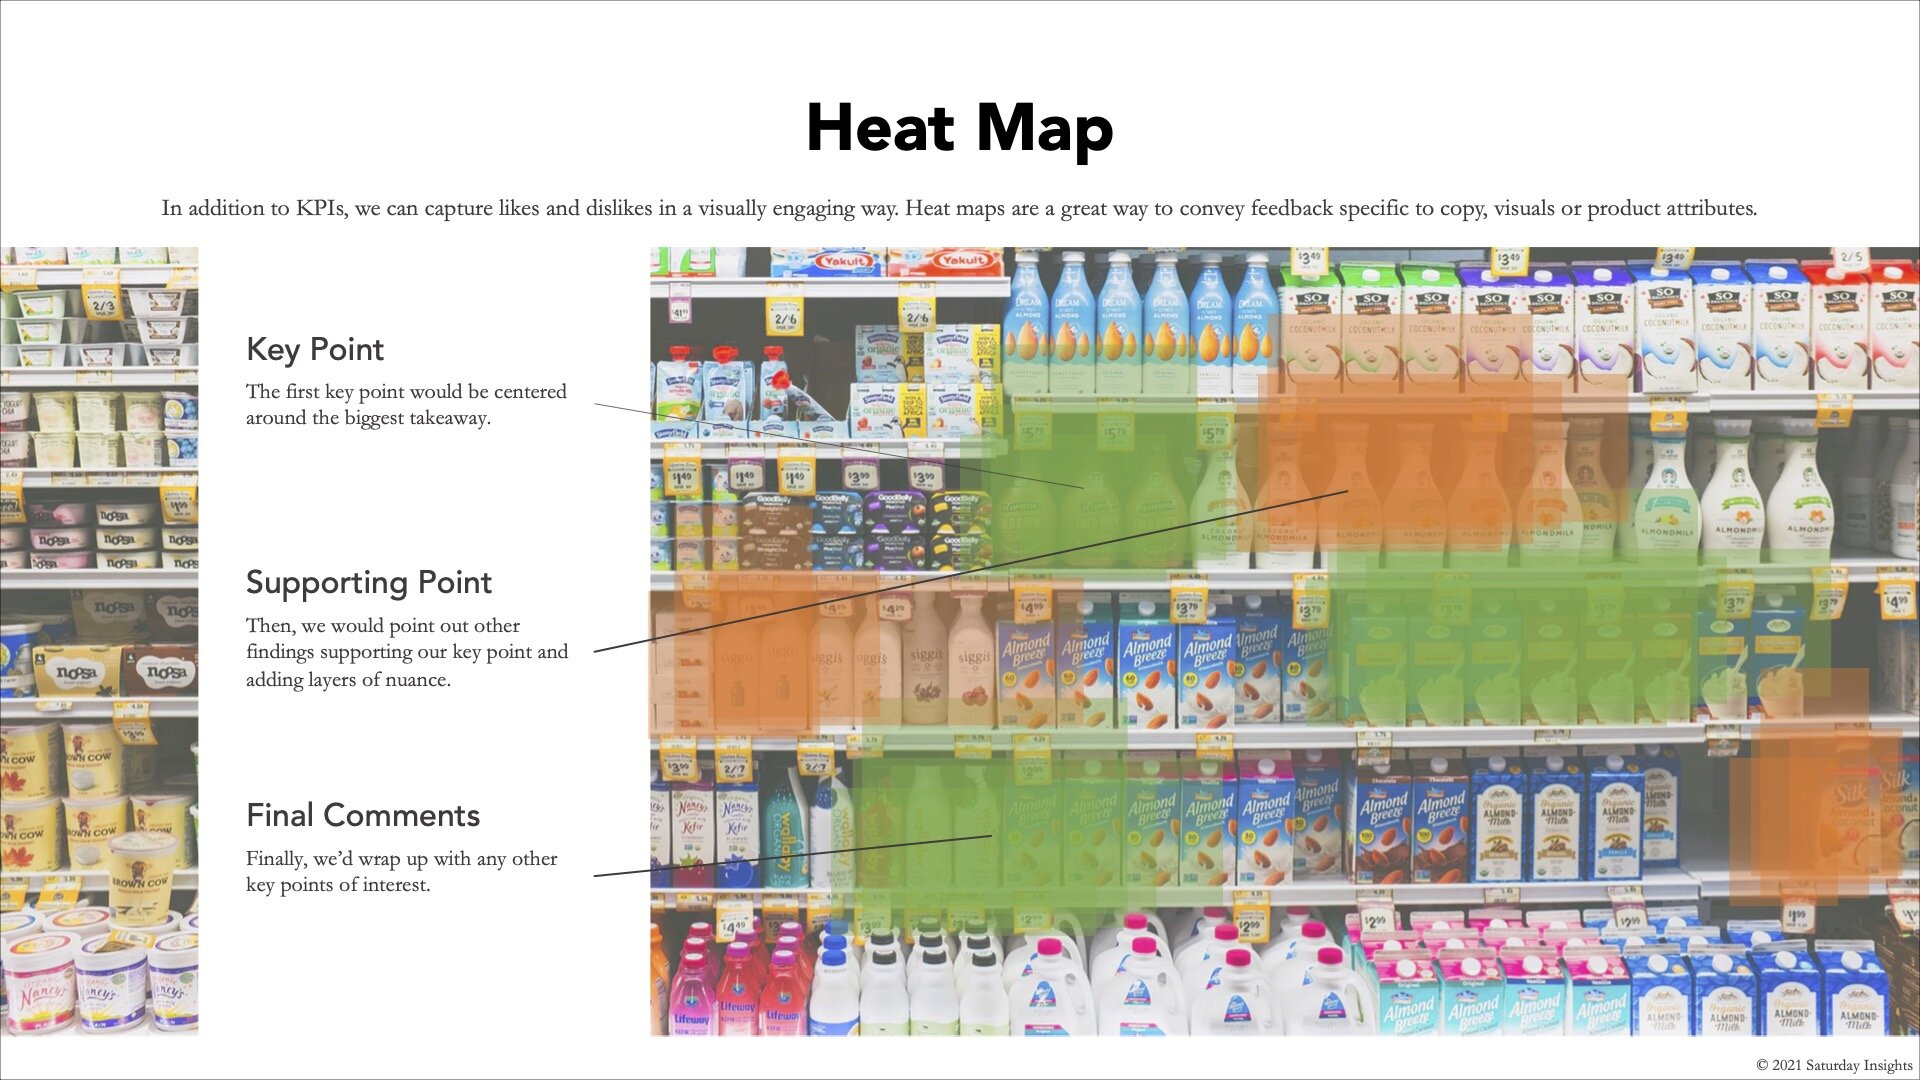 HeatMap copy.jpg